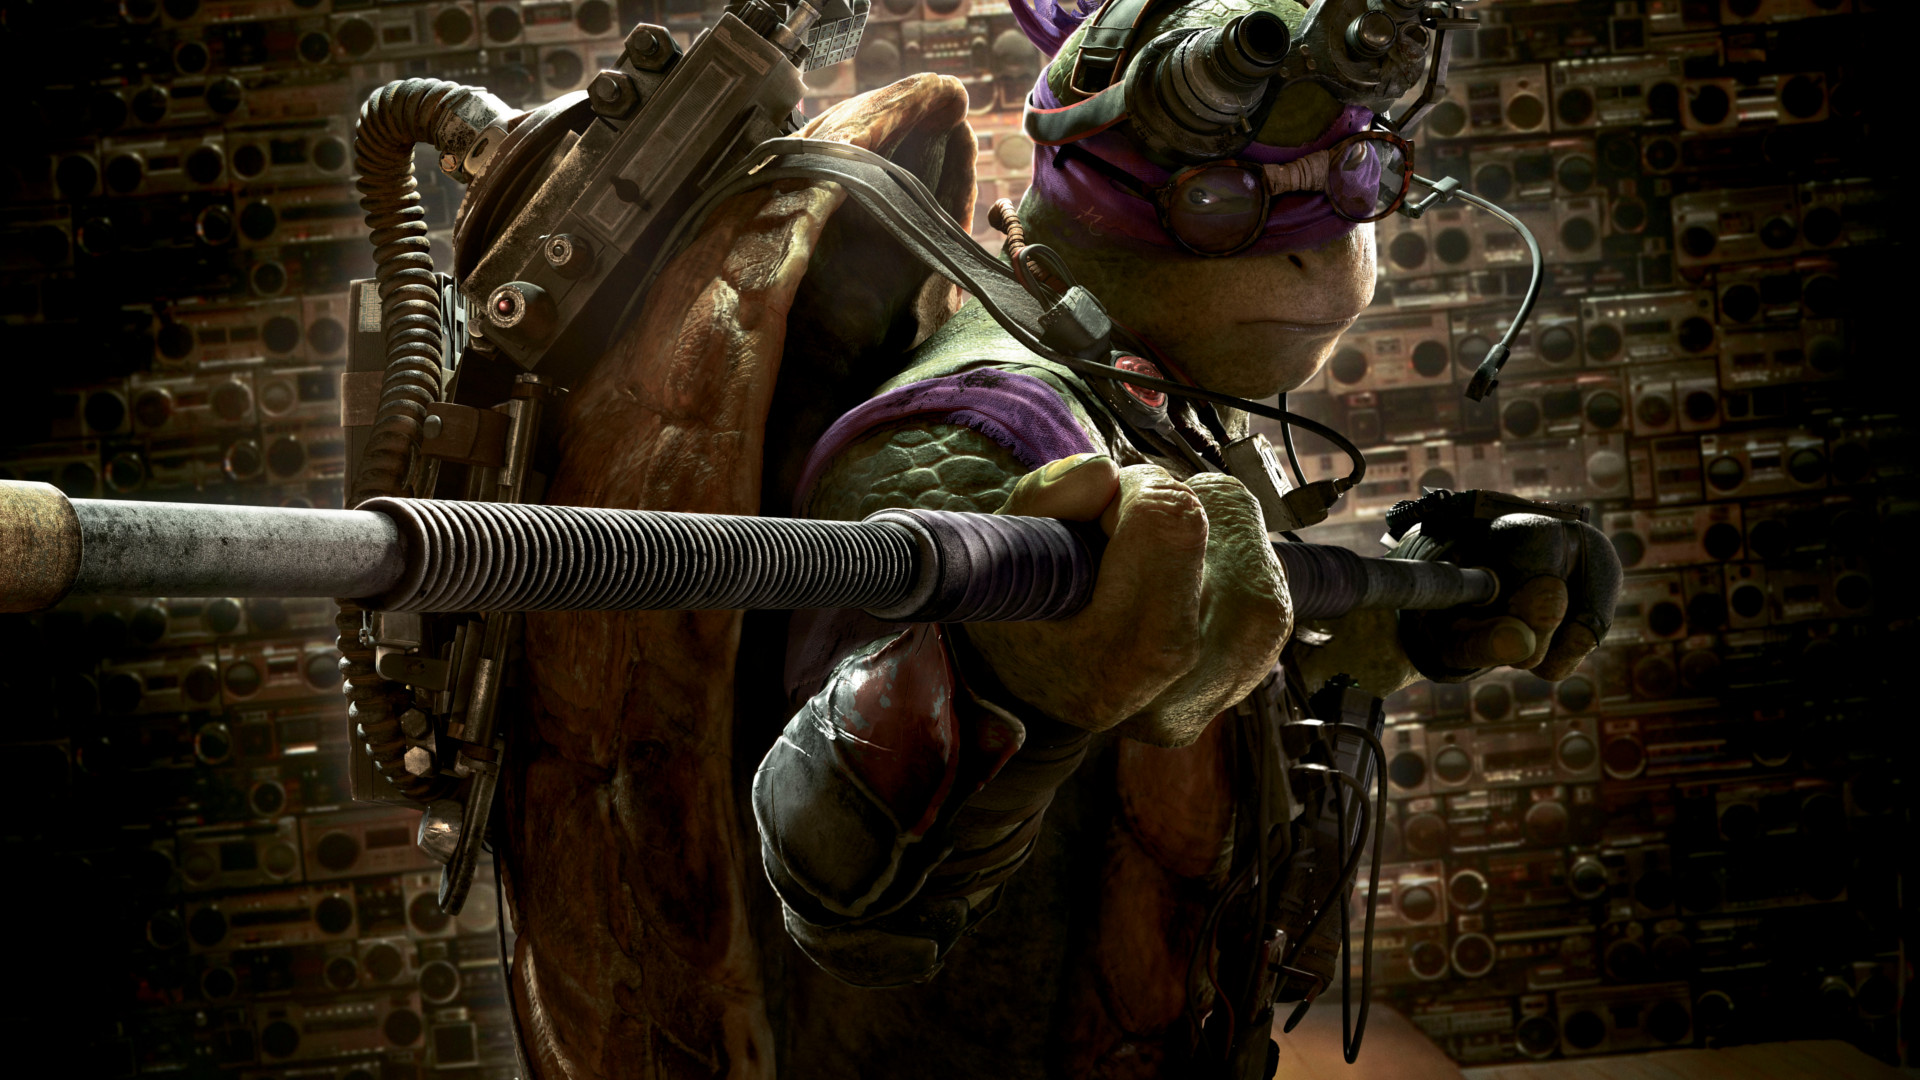 Descarga gratis la imagen Películas, Donatello (Tmnt), Las Tortugas Ninja, Ninja Turtles (2014) en el escritorio de tu PC